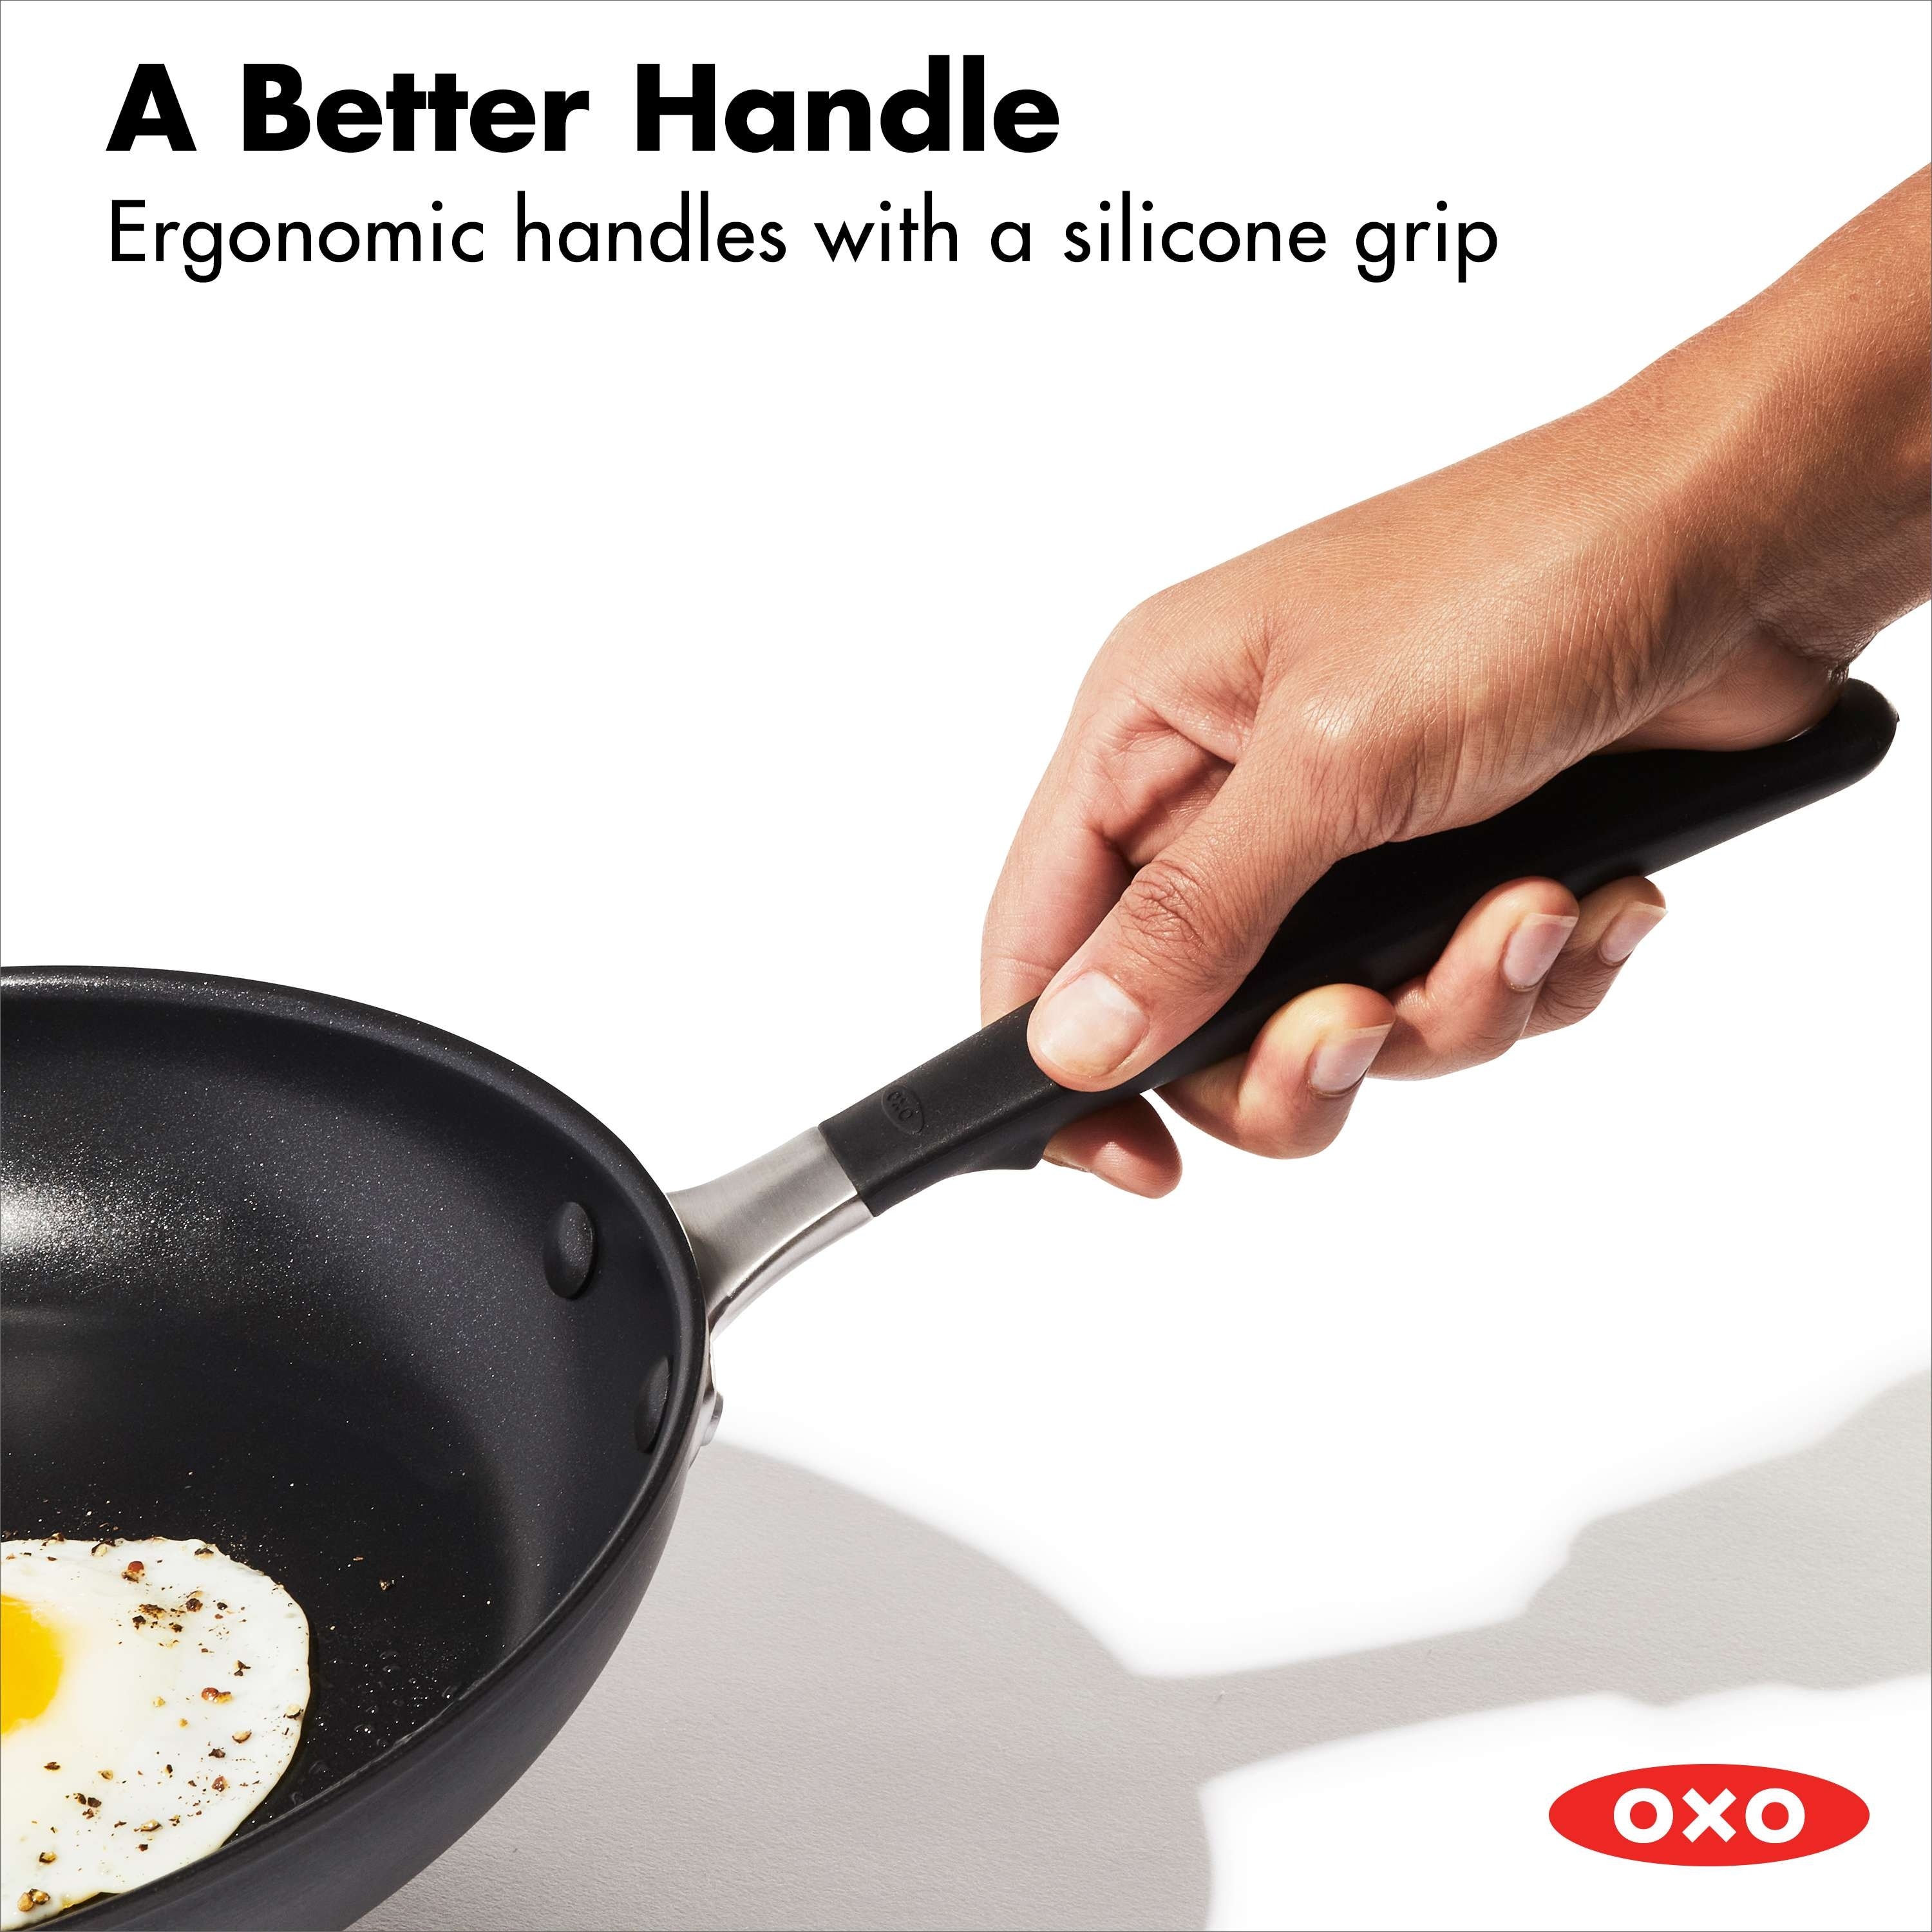 OXO Good Grips Non-Stick Pro 12 Piece Cookware Set 